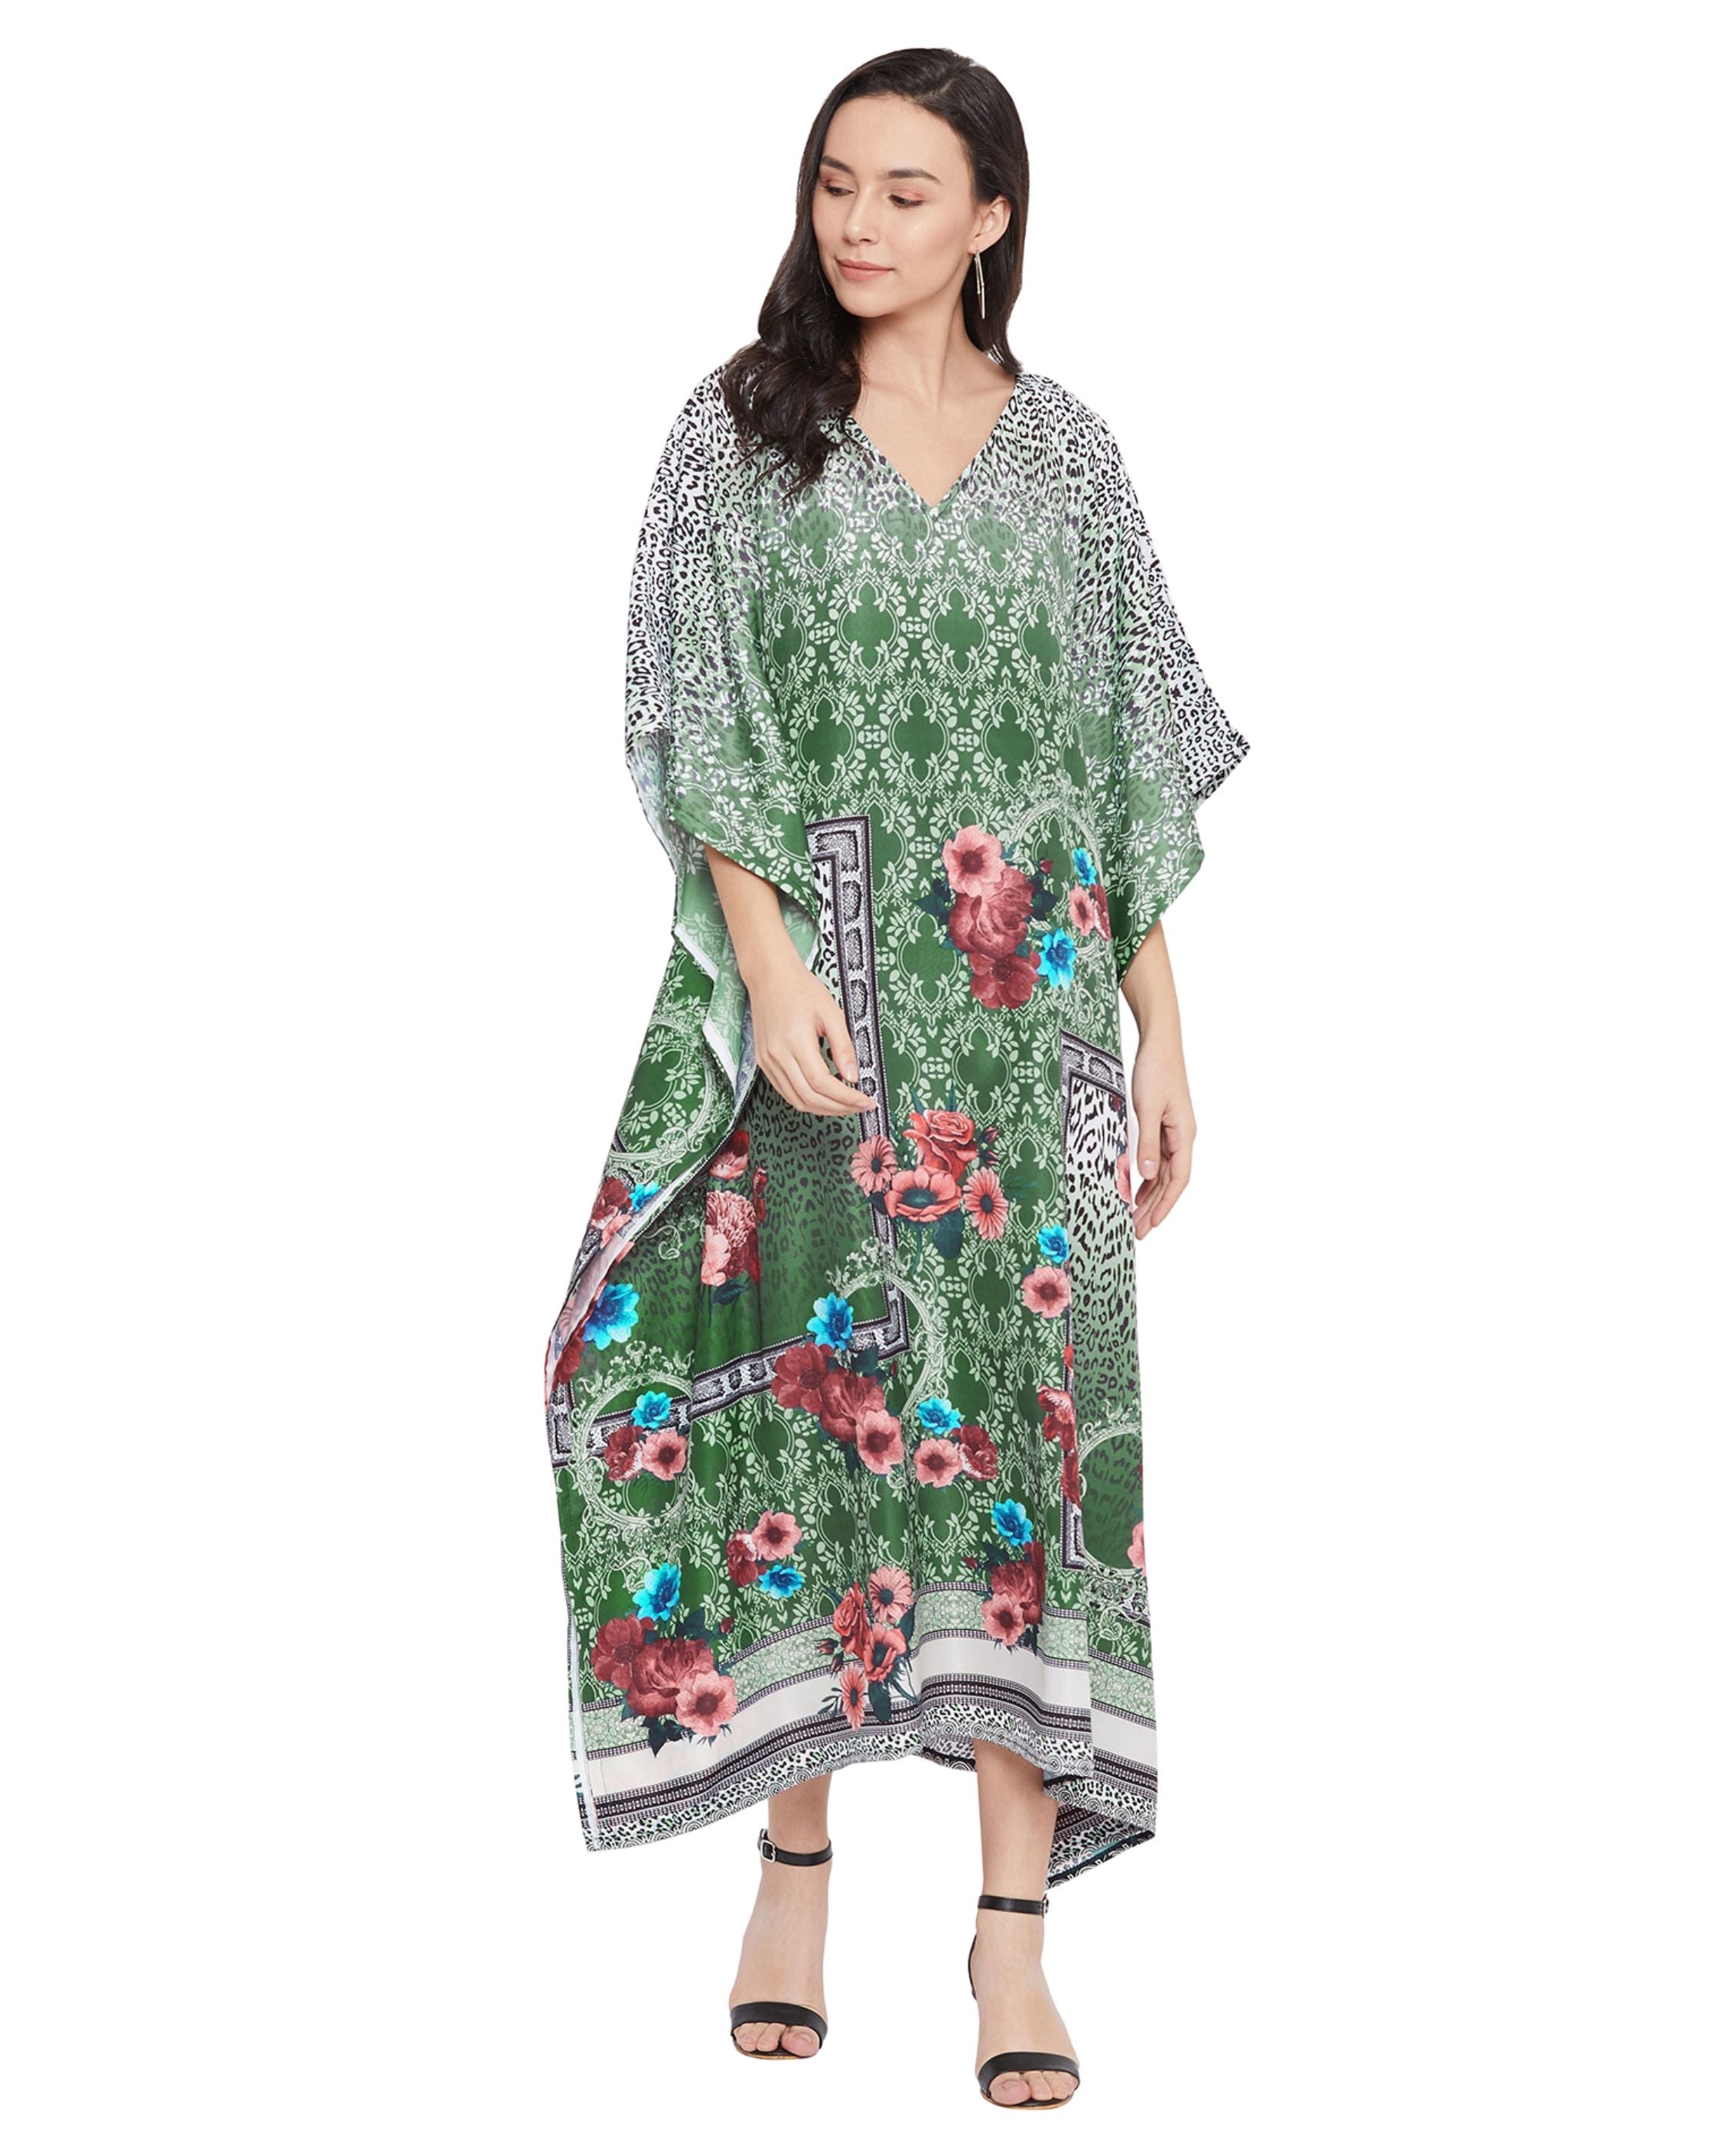 Tribal Printed Green Polyester Kaftan Dress for Women